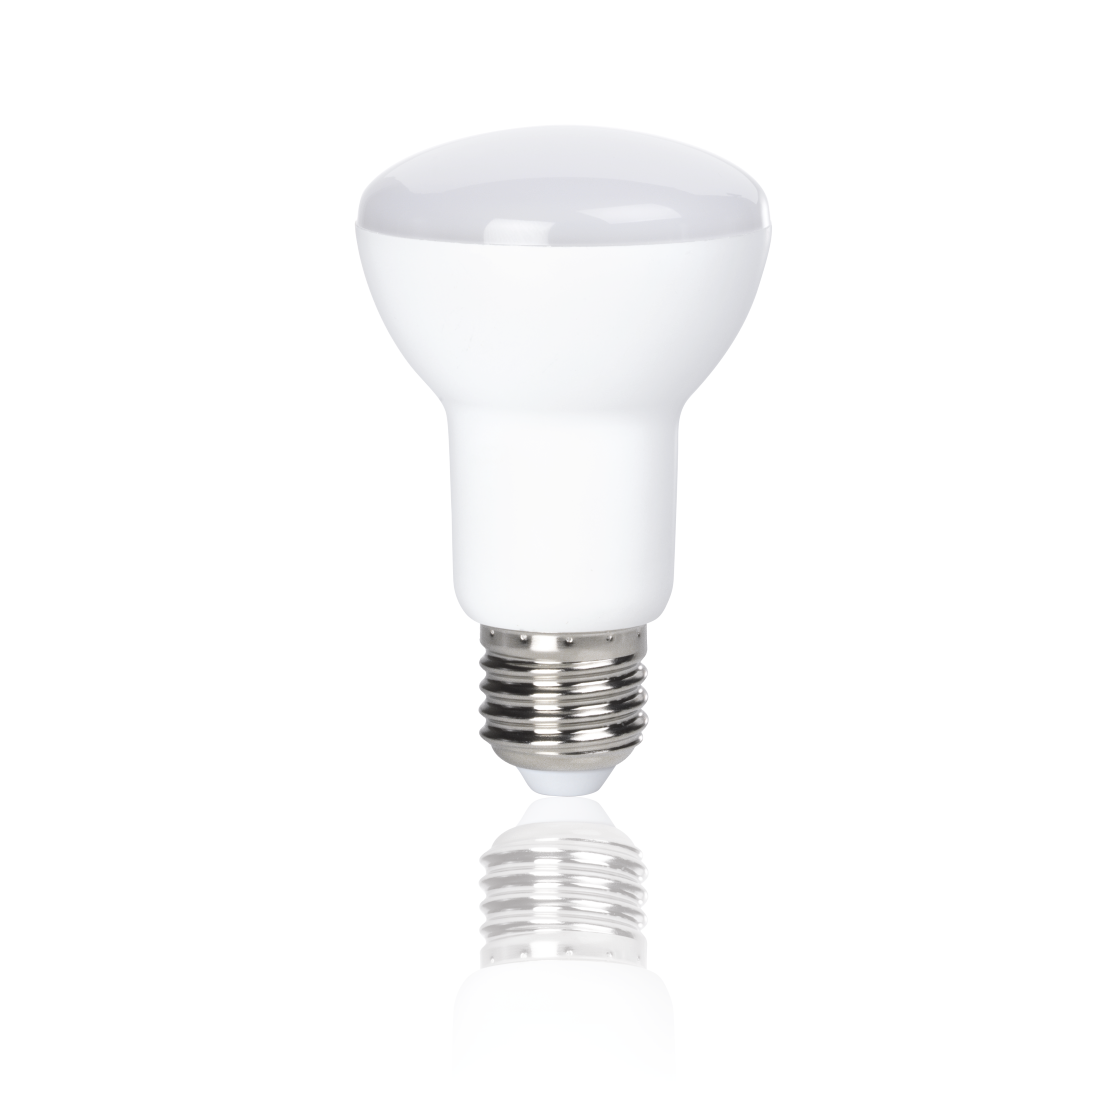 abx2 High-Res Image 2 - Xavax, LED Bulb, E27, 630 lm Replaces 60 W, Reflector Bulb R63, warm white